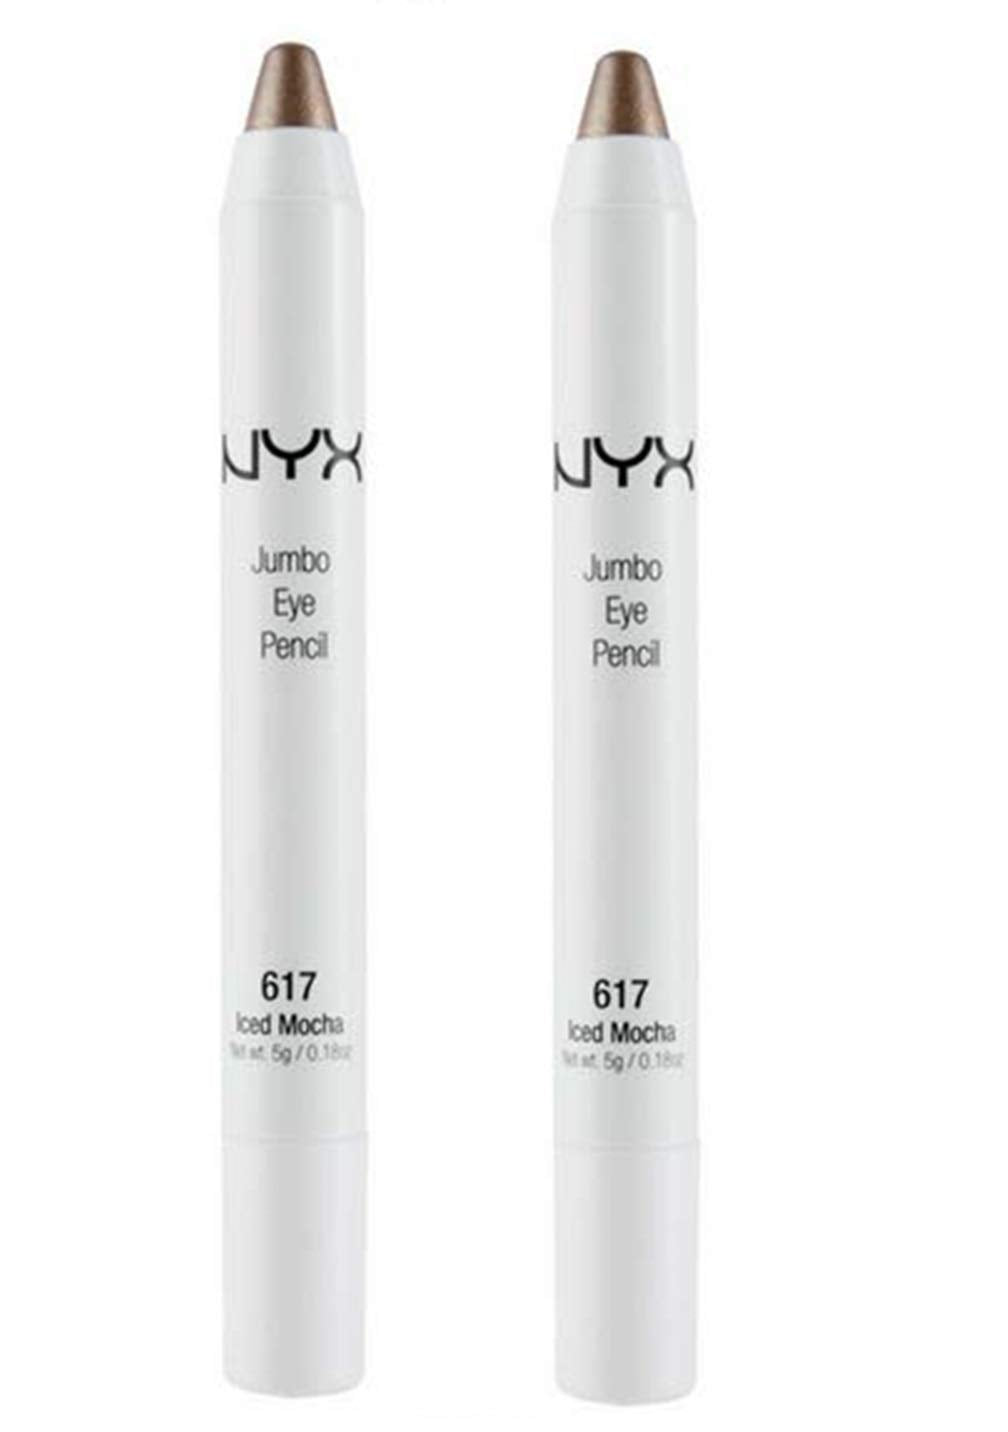 Pack of 2 NYX Jumbo Eye Pencil, 617 - Iced Mocha, JEP617